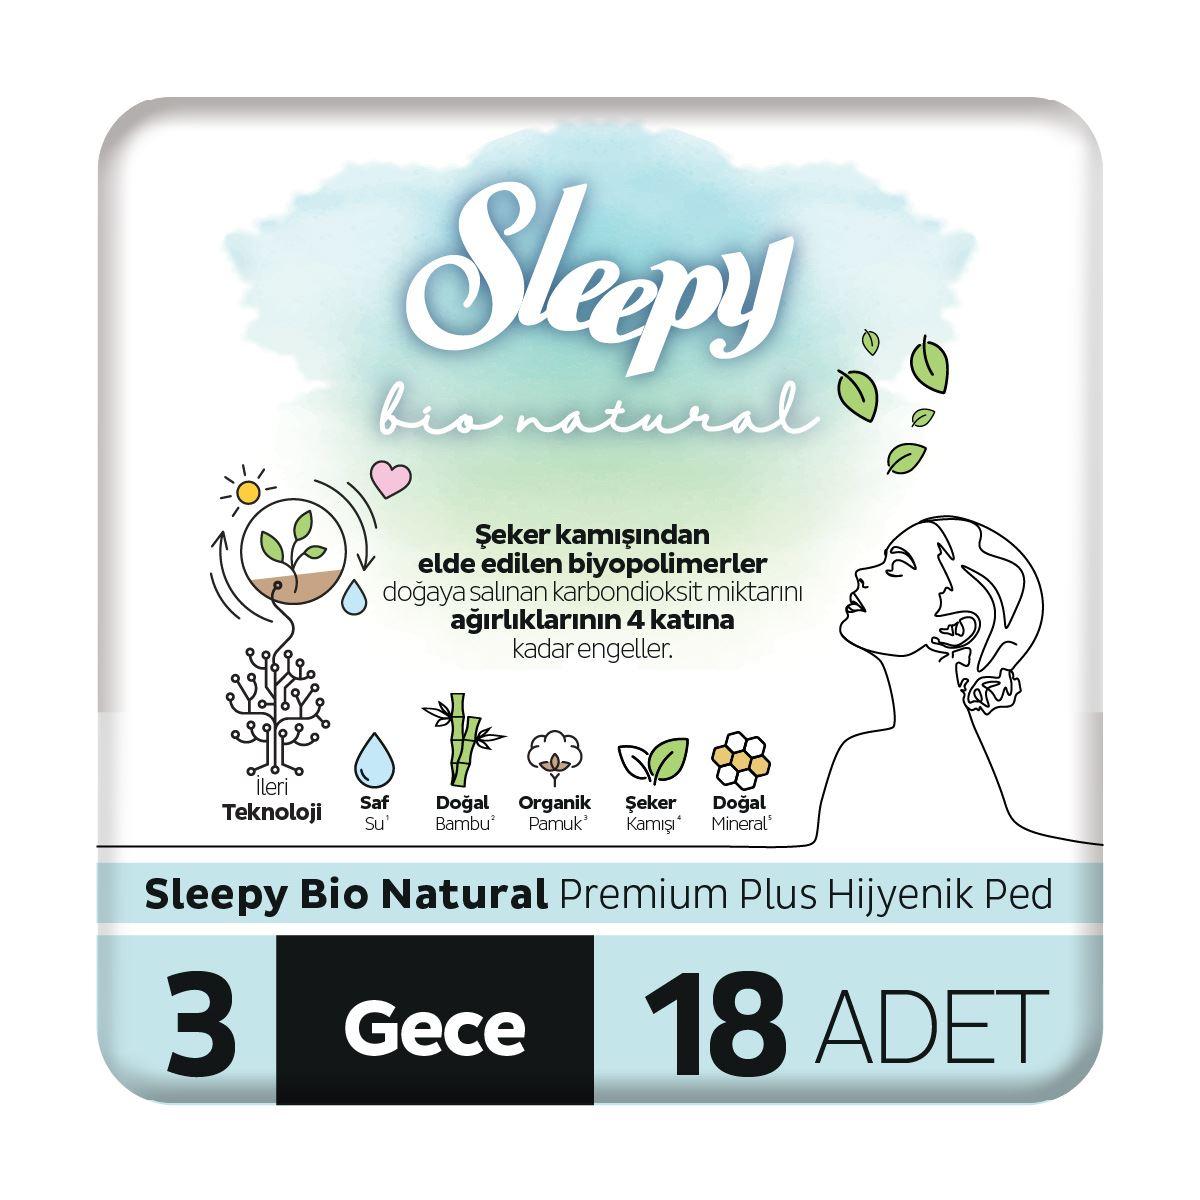 Sleepy Bio Natural Premium Plus Hijyenik Ped Gece 18 Adet Ped